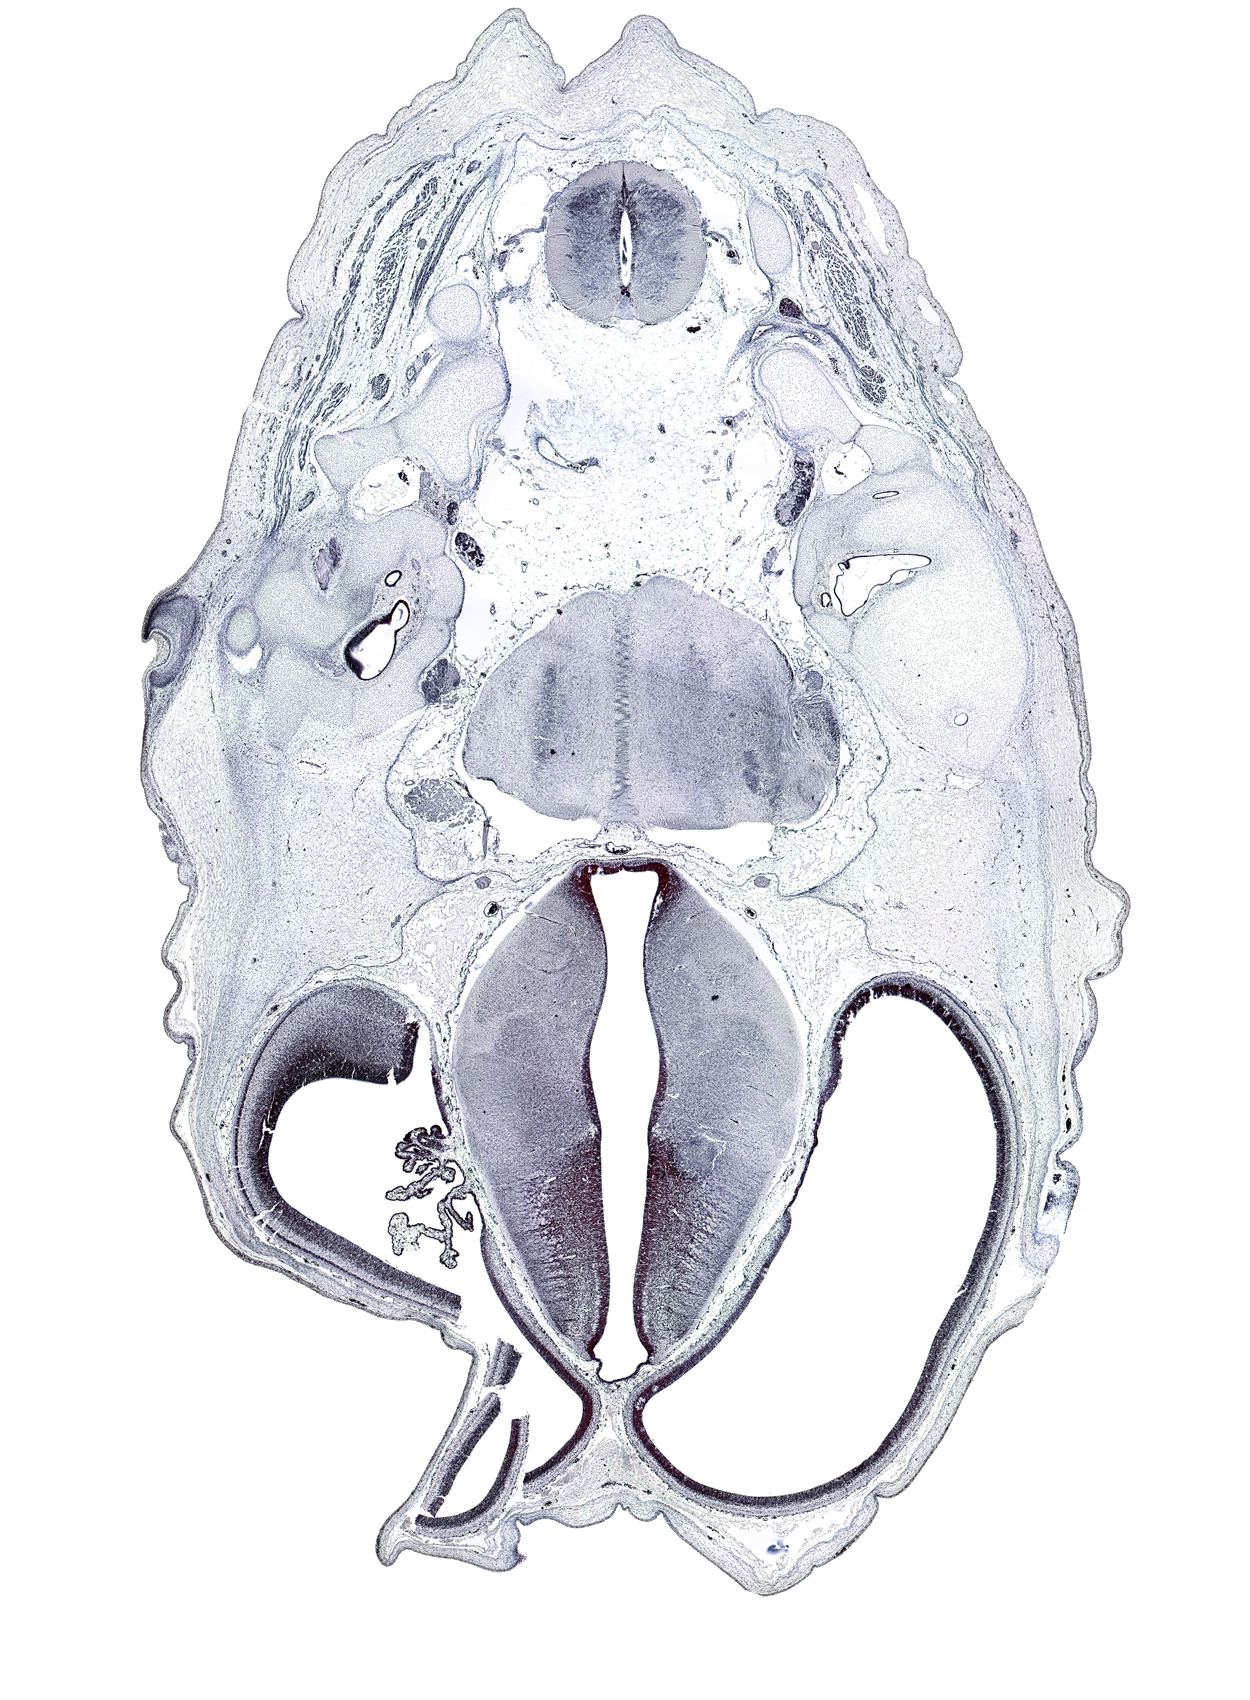 C-1 spinal ganglion, artifact space(s), artifact(s), decussation, dorsal median septum, dorsal thalamus, glossopharyngeal nerve (CN IX), hypothalamic sulcus, hypothalamus, nucleus of spinal tract of trigeminal nerve, obliquus capitis superior muscle, posterior arch of C-1 vertebra (atlas), root of vestibulocochlear nerve (CN VIII), semispinalis capitis muscle, splenius muscle, sulcus dorsalis, superior ganglion of vagus nerve (CN X), trapezius muscle, utricle, ventral thalamus, zona limitans intrathalamica